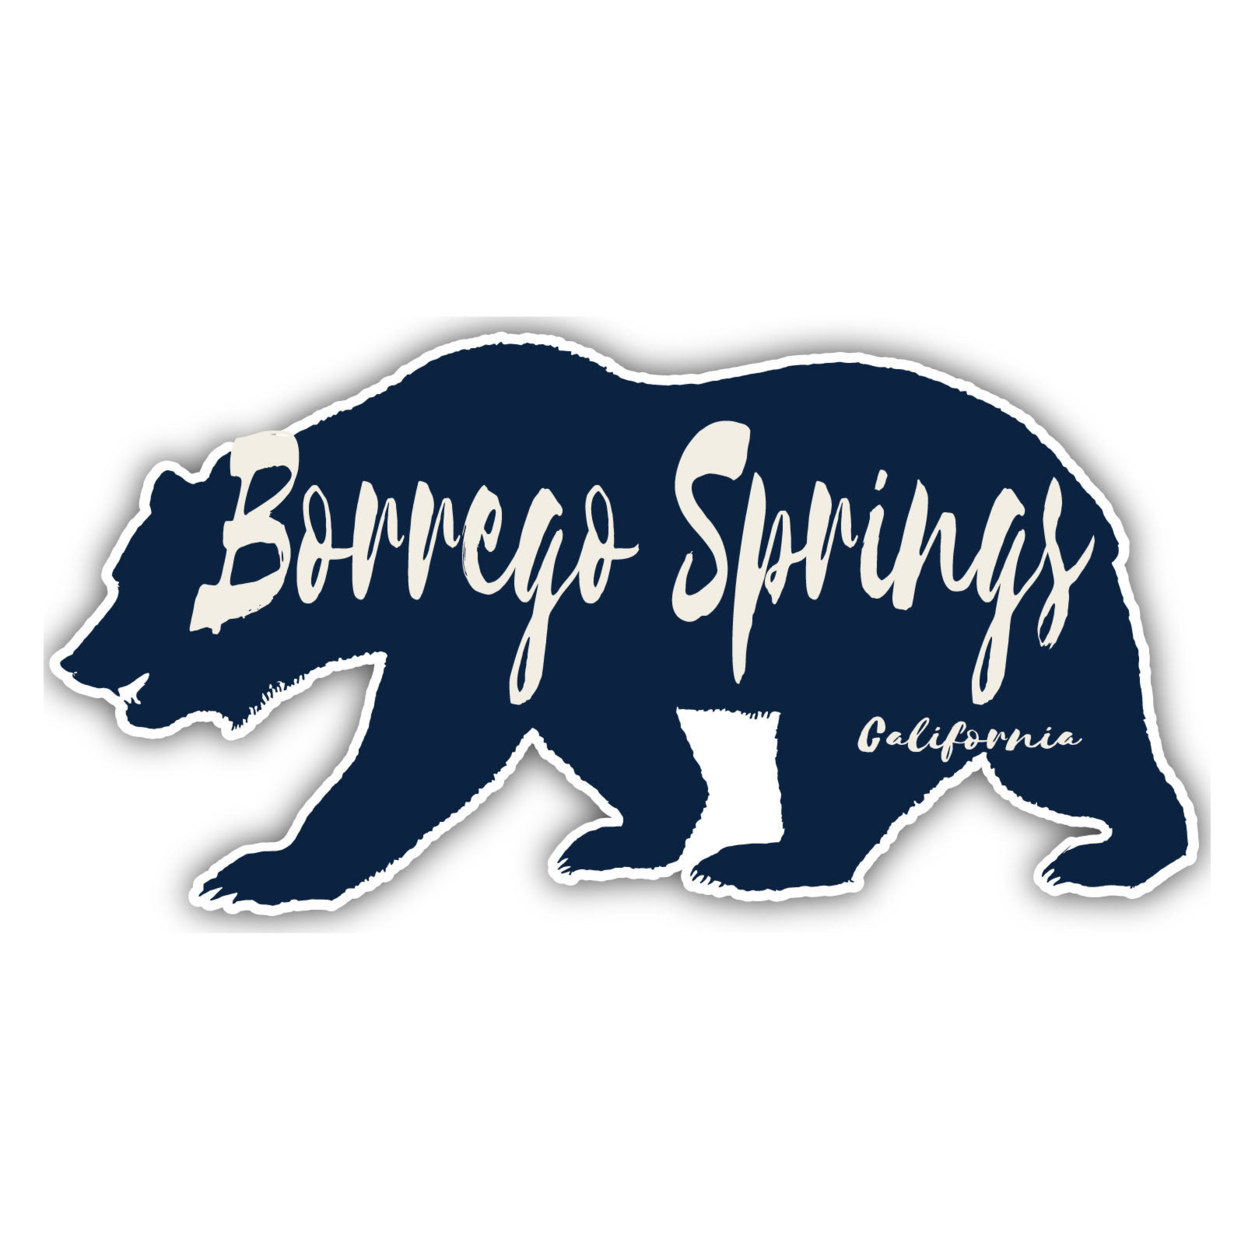 Borrego Springs California Souvenir Decorative Stickers (Choose Theme And Size) - 4-Pack, 4-Inch, Bear